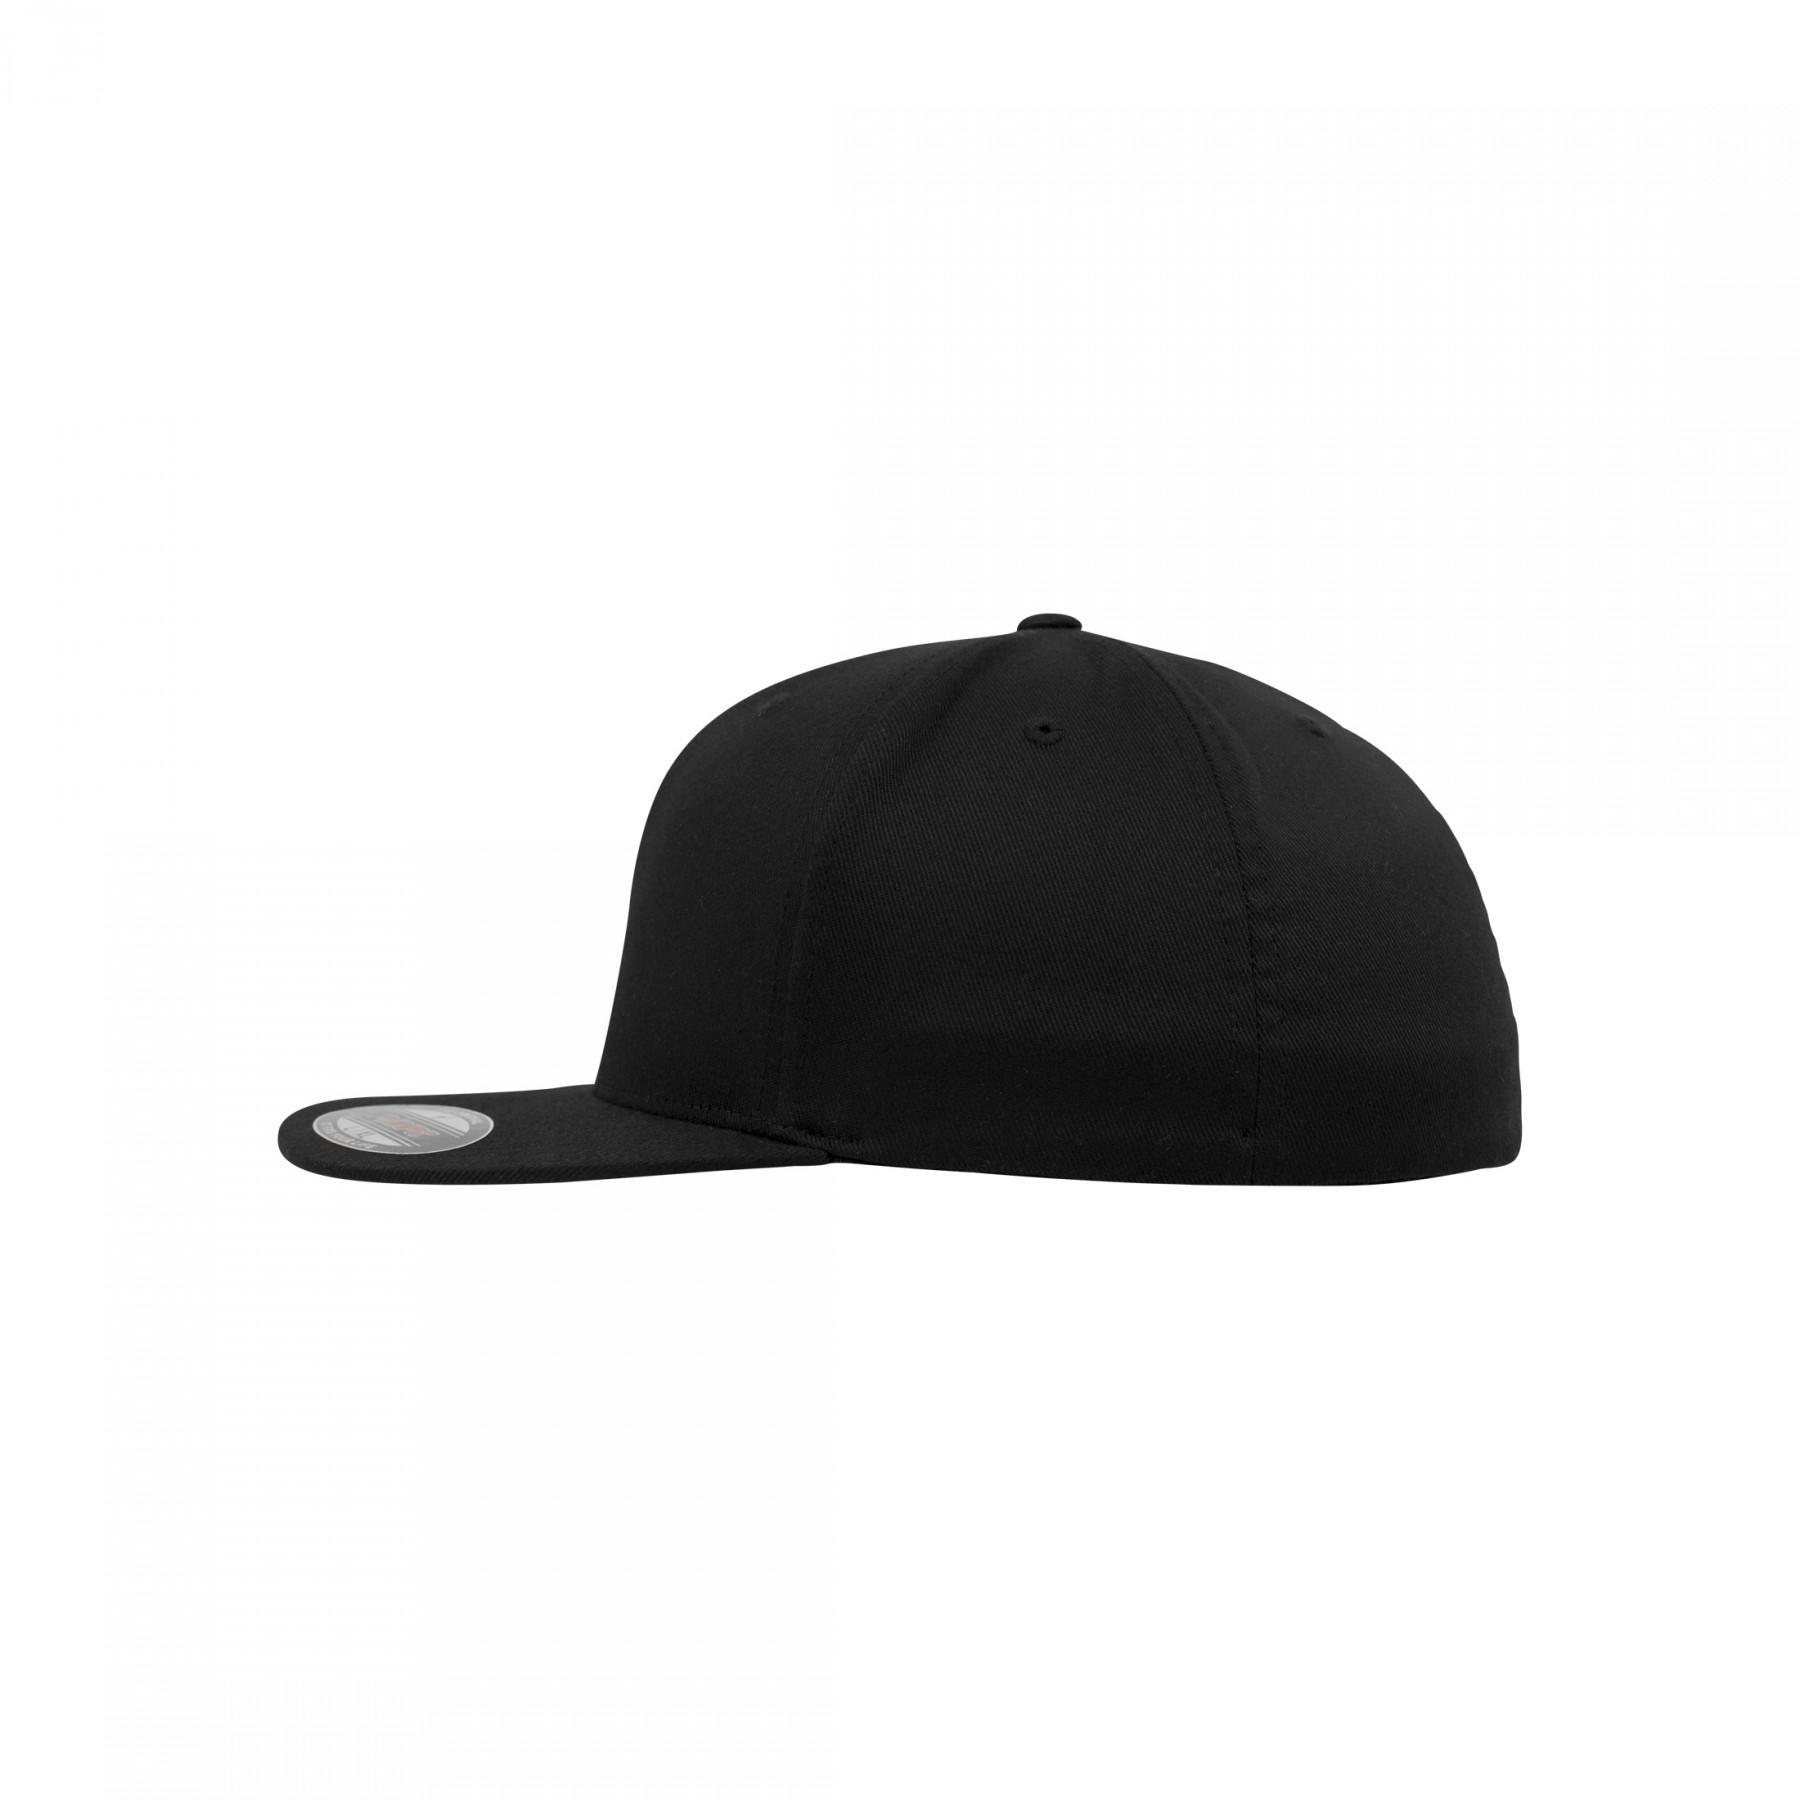 Cap Flexfit flat visor